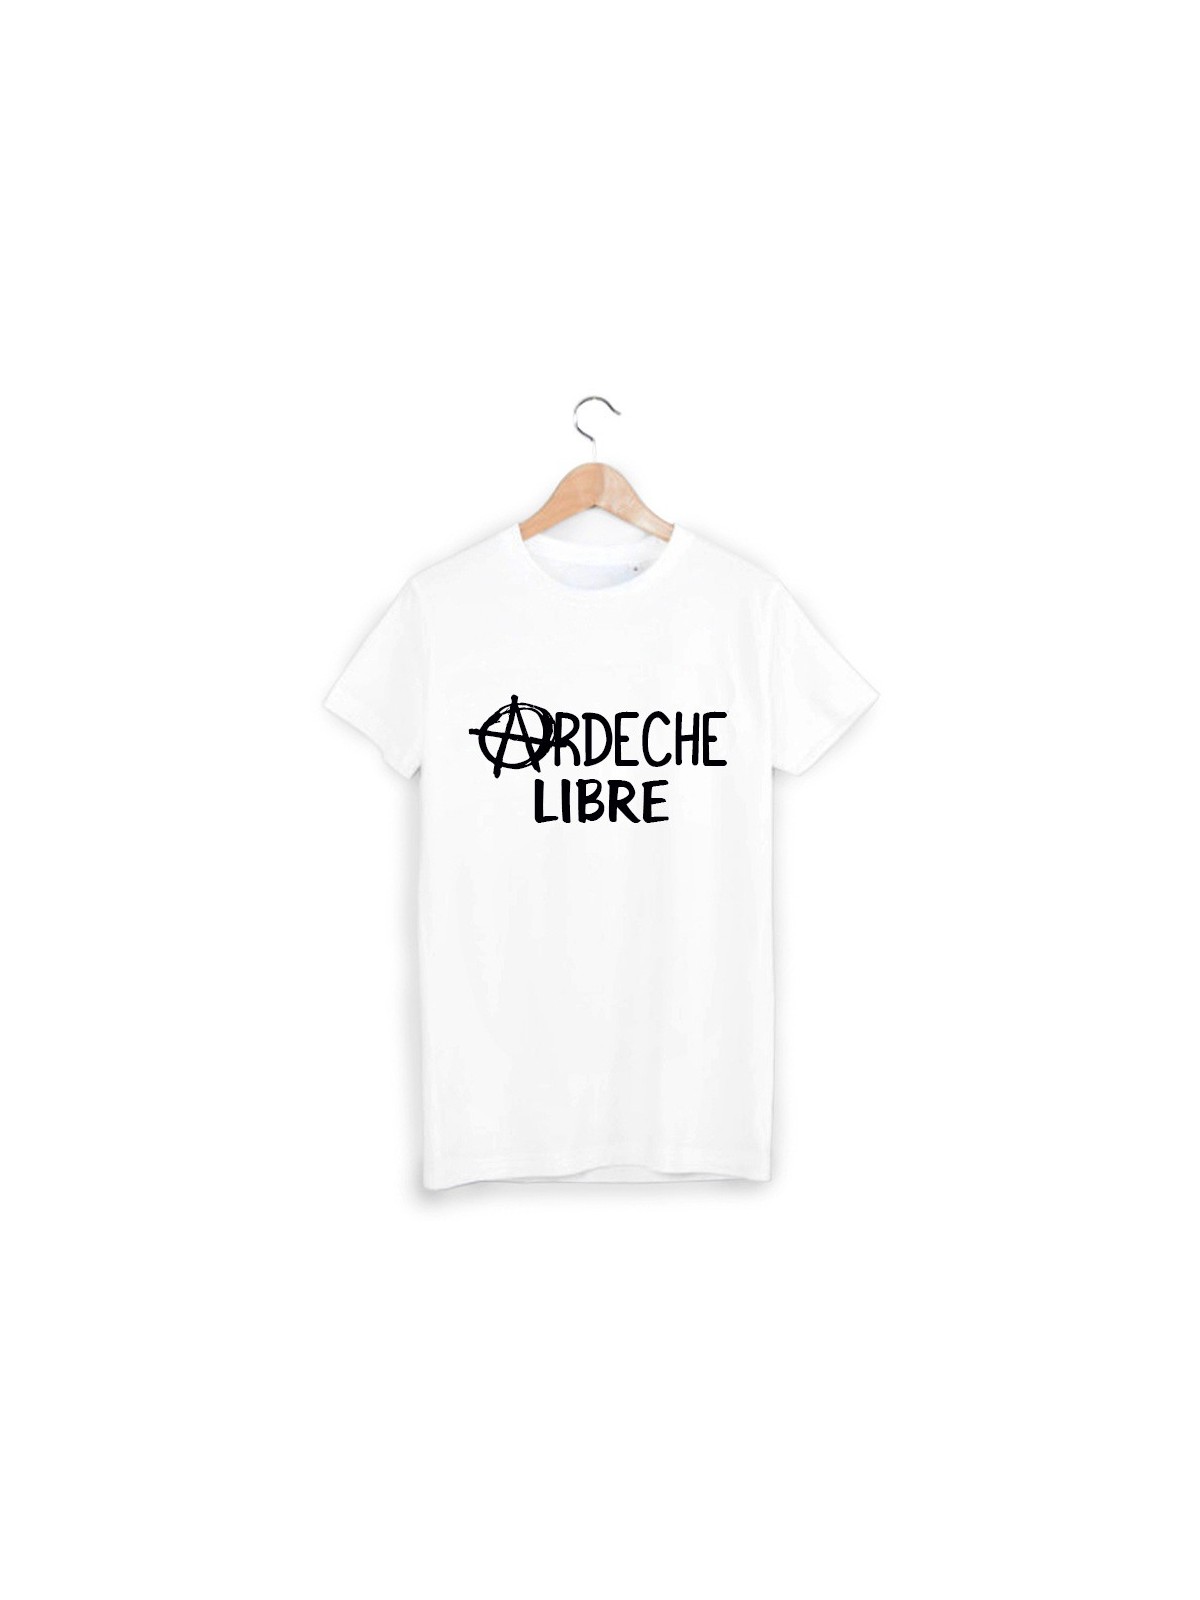 T-Shirt Ardeche libre ref 1633